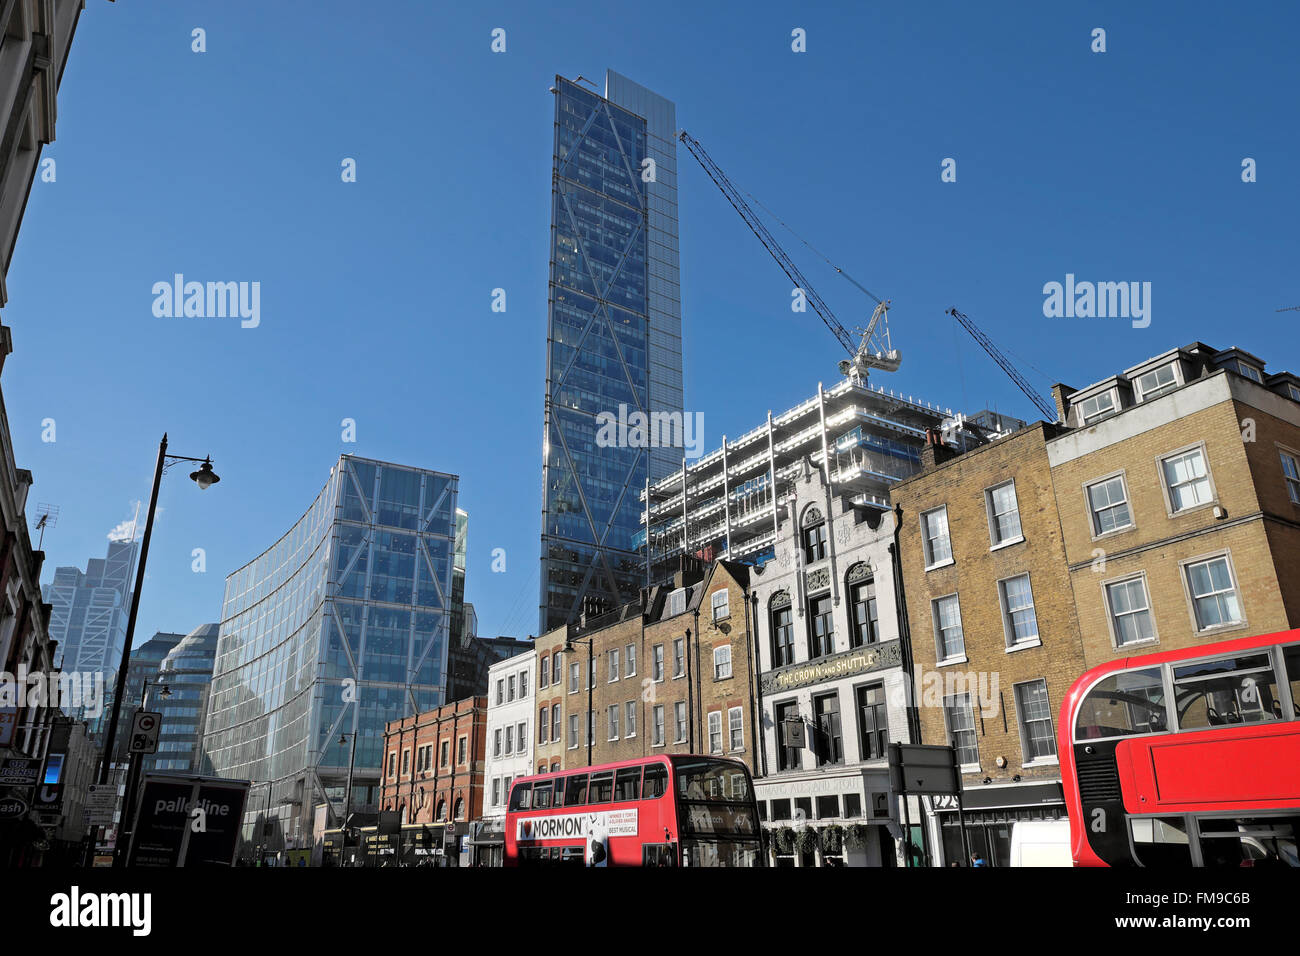 A street scene view of historic and modern buildings from Norton Folgate, Spitalfields London UK  KATHY DEWITT Stock Photo